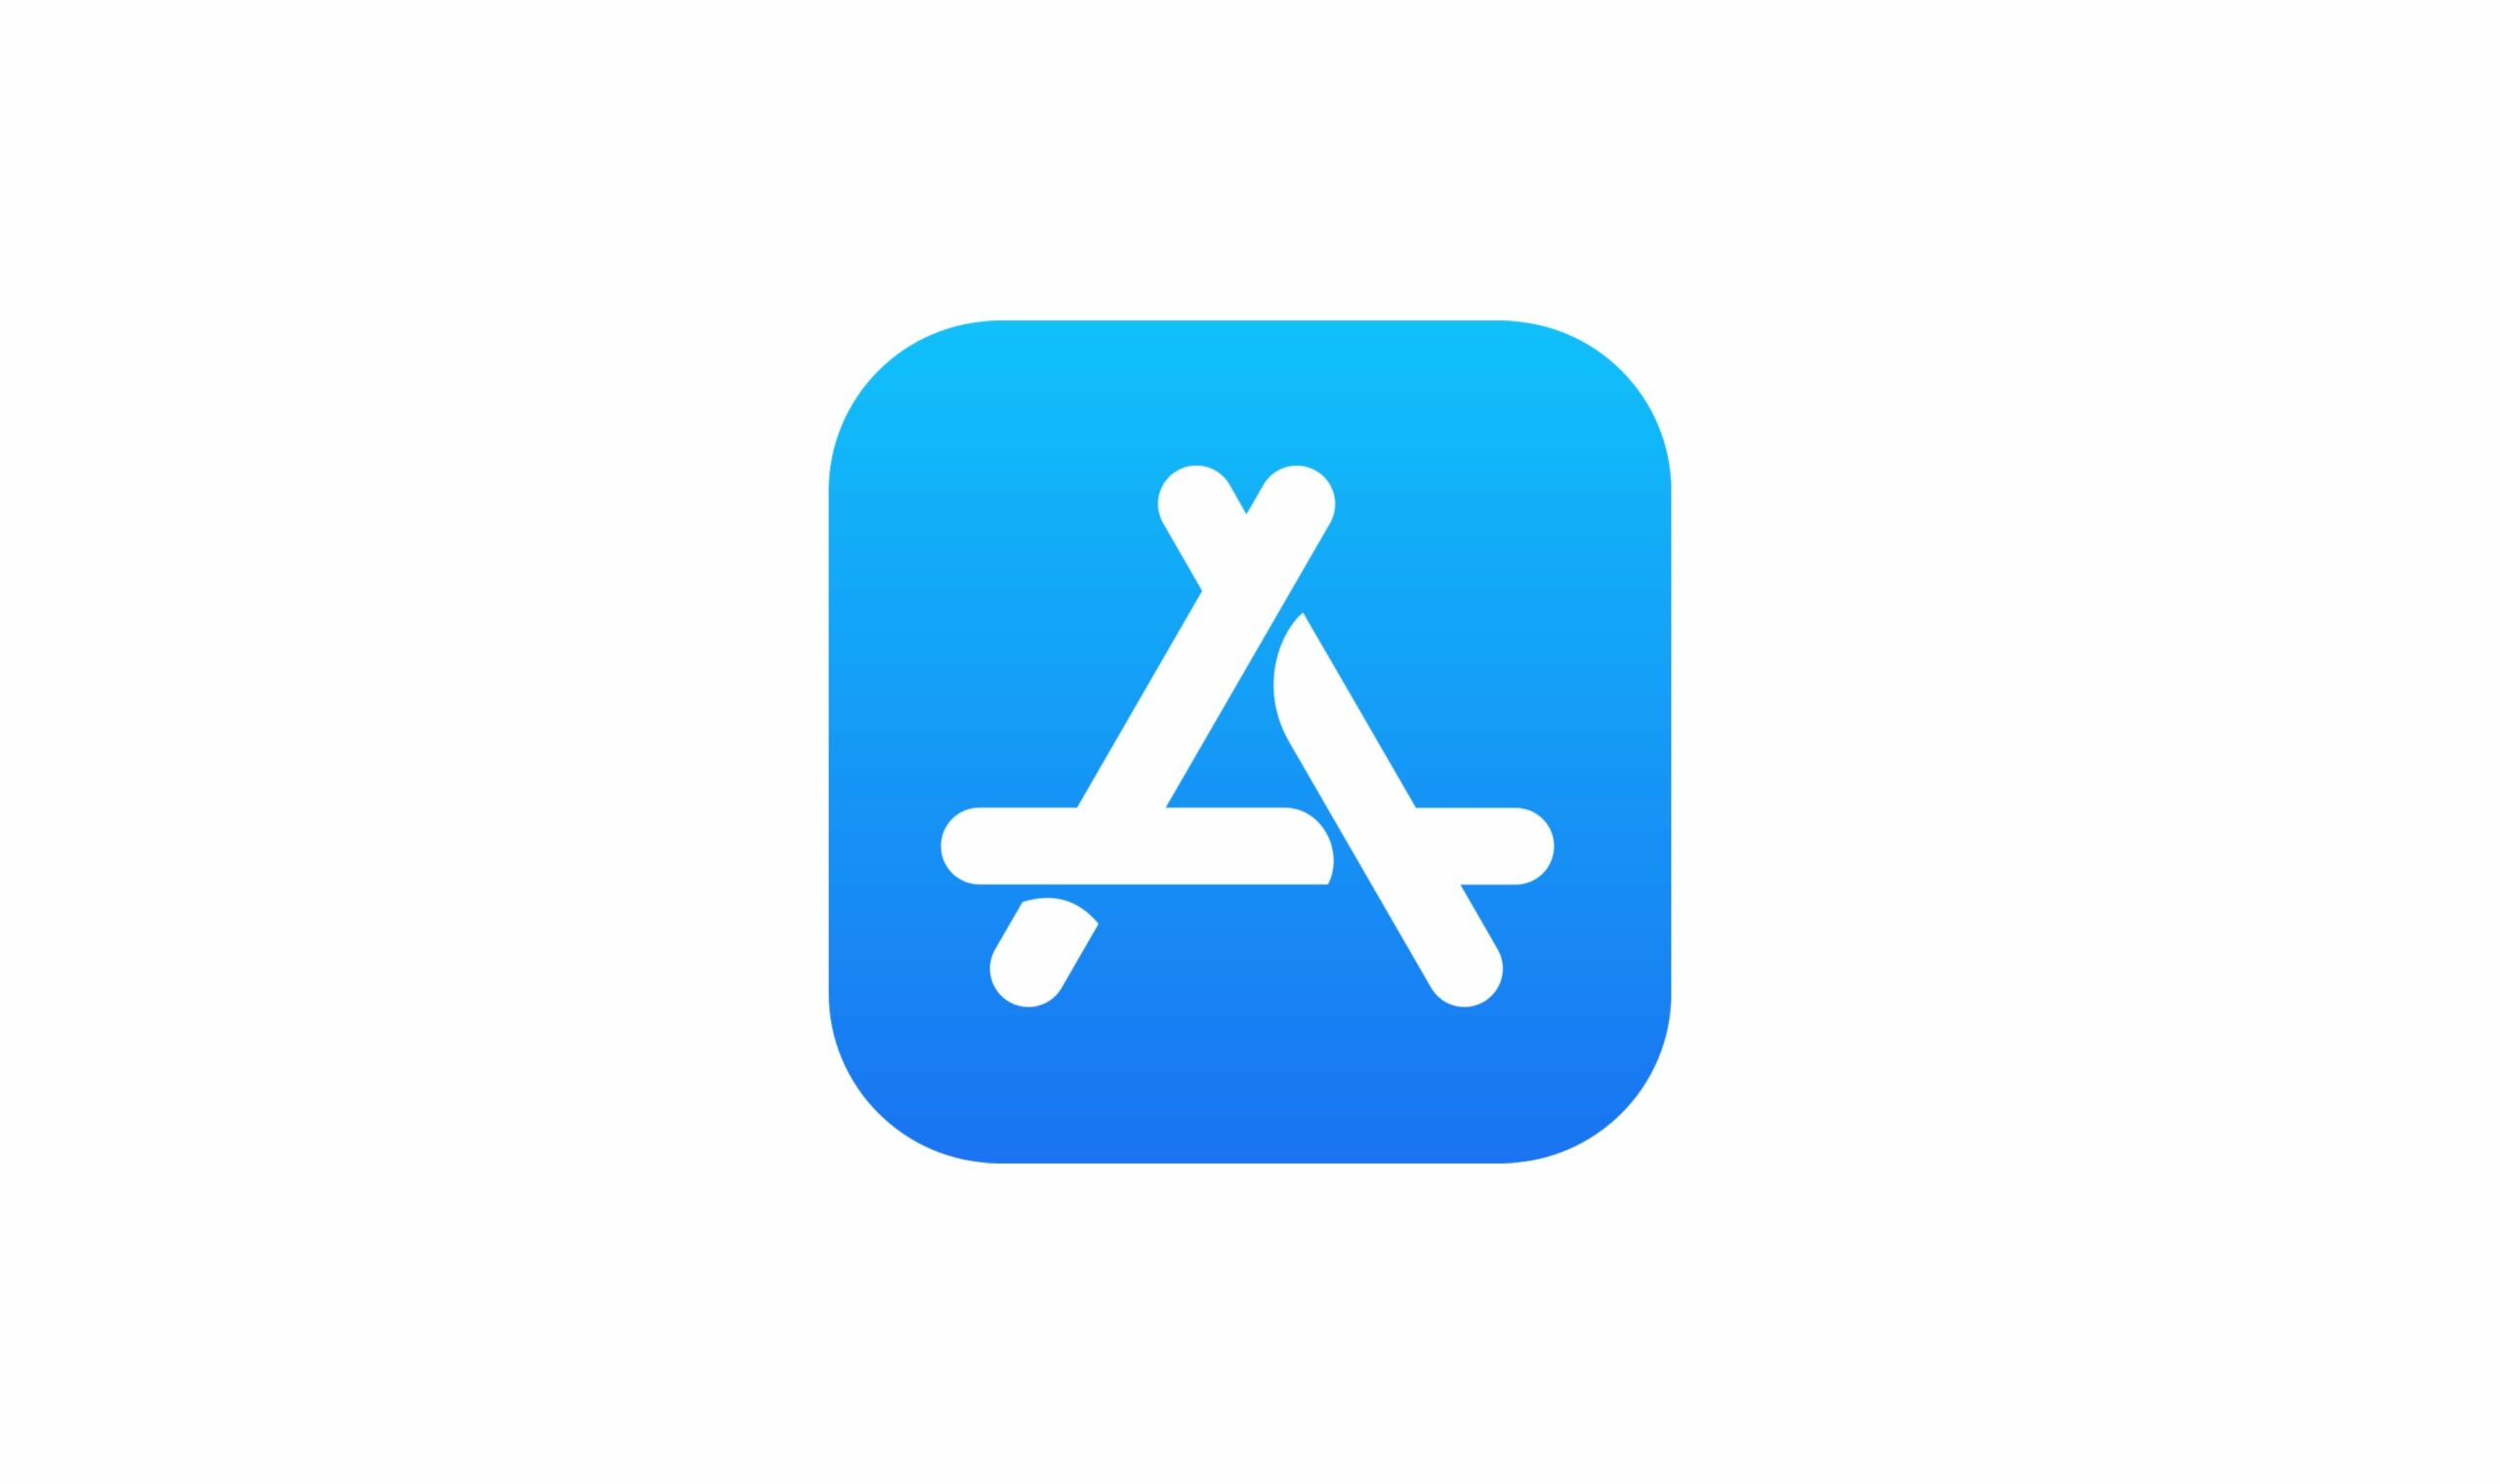 Appleપલ એપ્લિકેશન સ્ટોર લોગો ફીચર્ડ